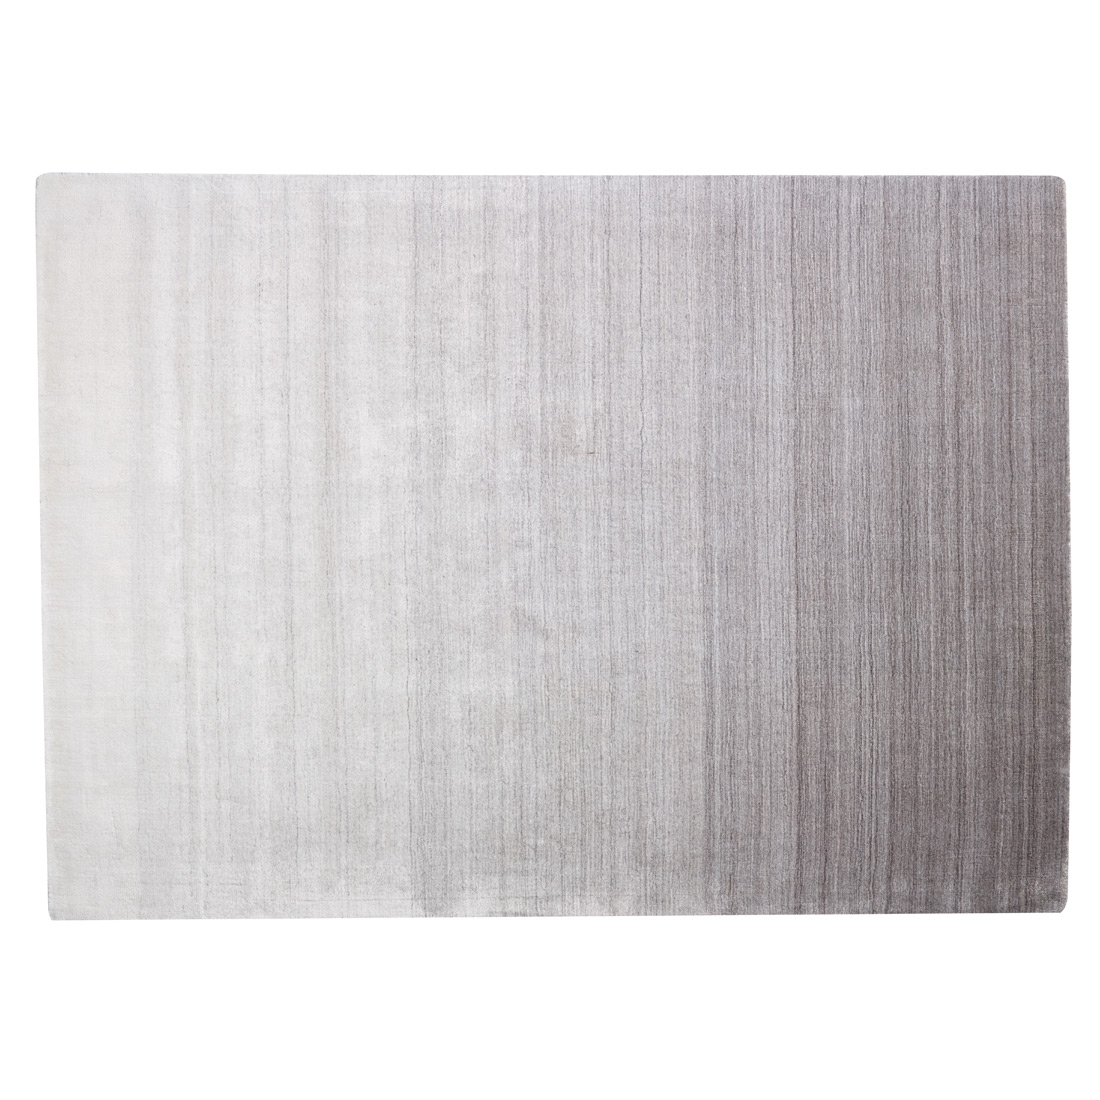 Teppich Xilento Admire Eifenbein | 170 x 230 cm